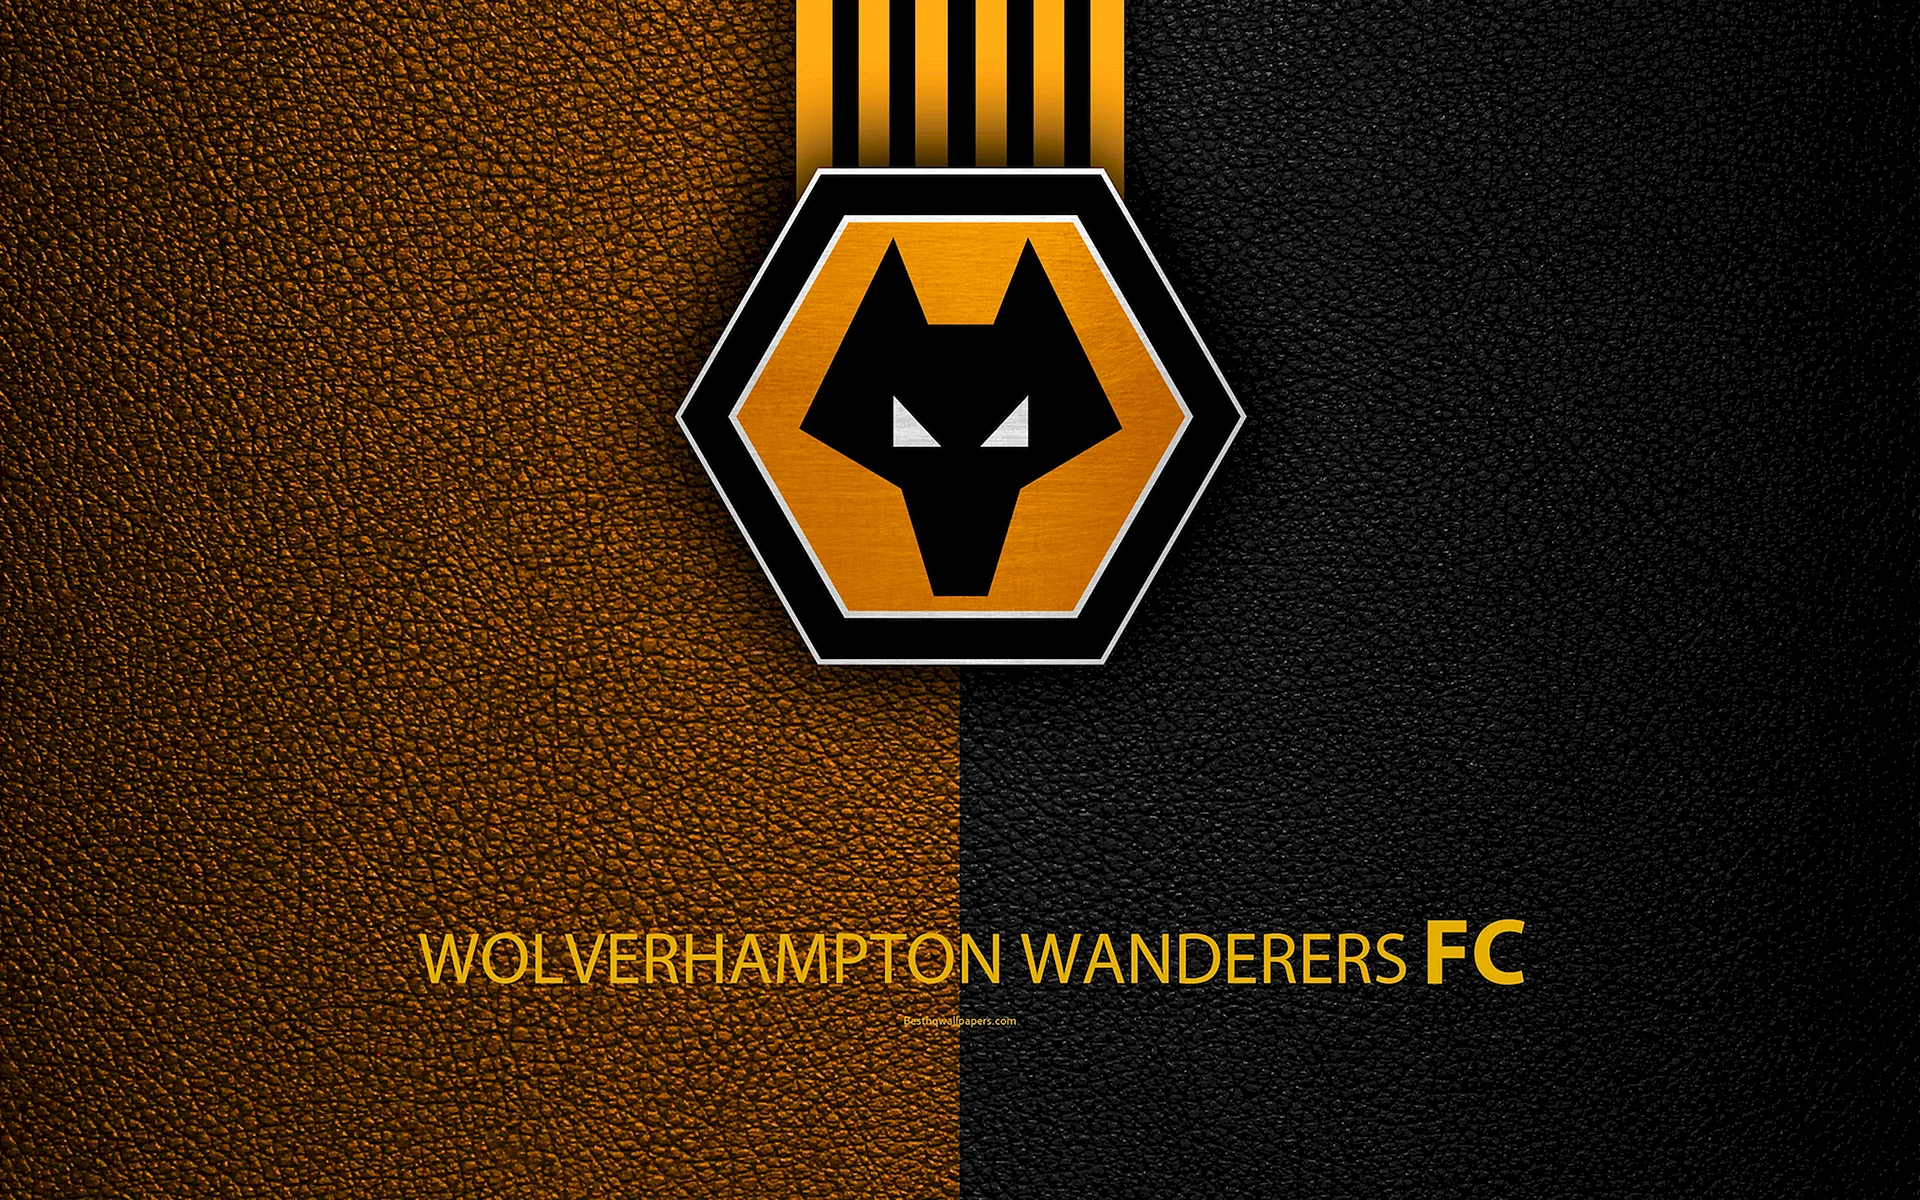 Wolverhampton Wanderers Wallpaper